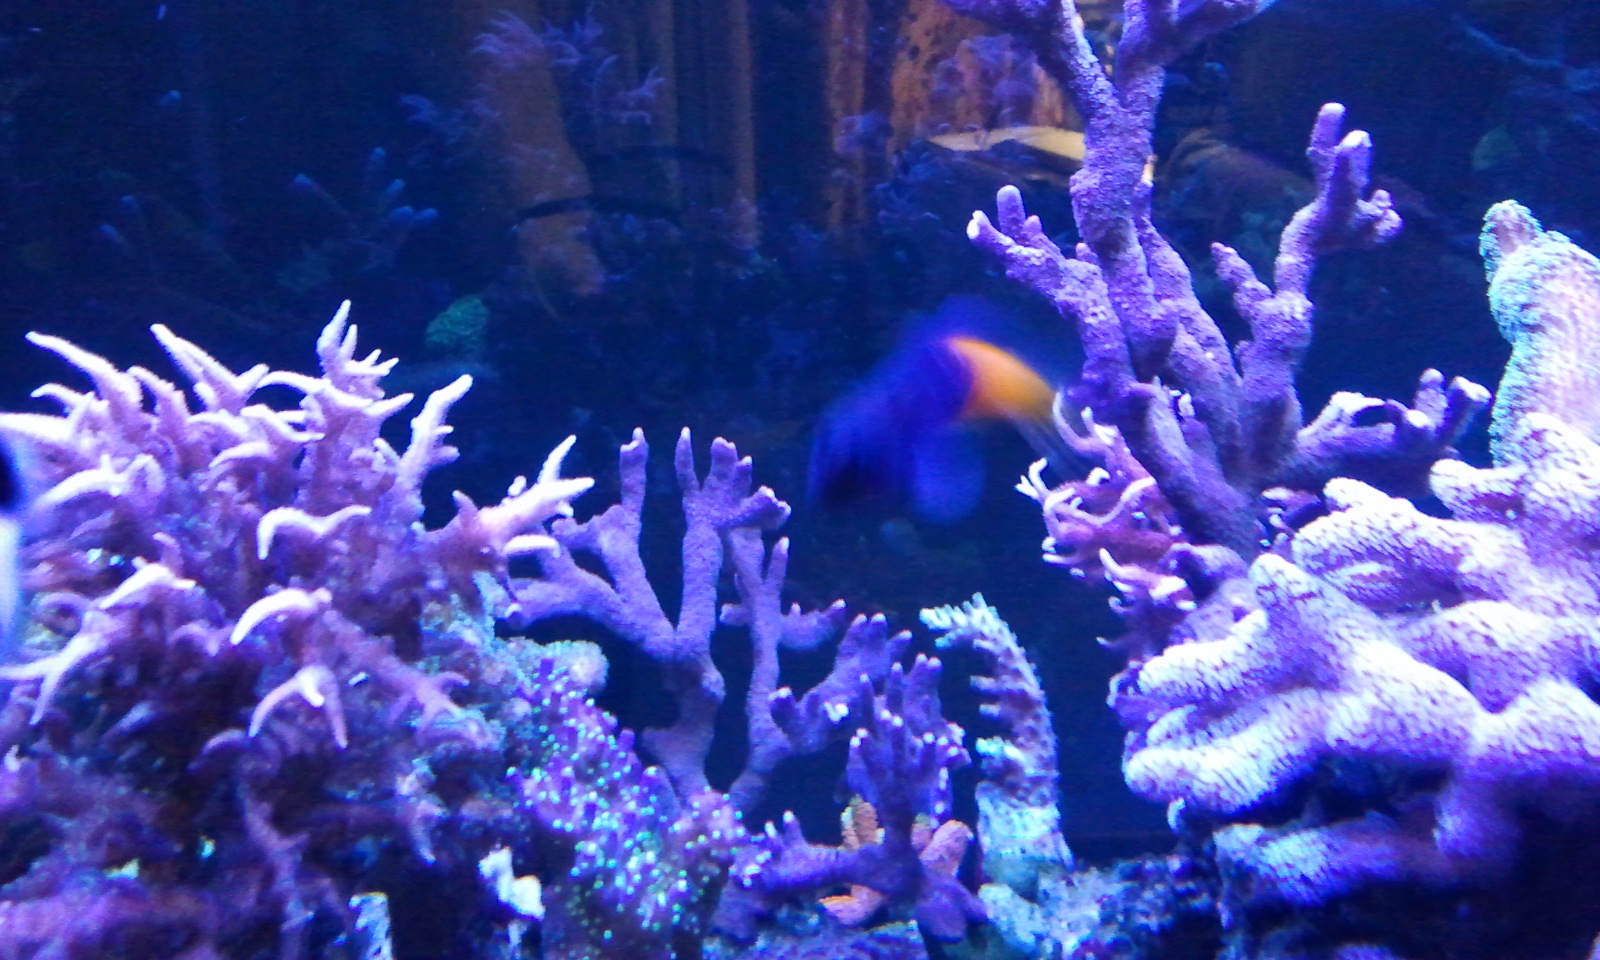 Кораллы своими руками — мастер-класс, как сделать кораллы